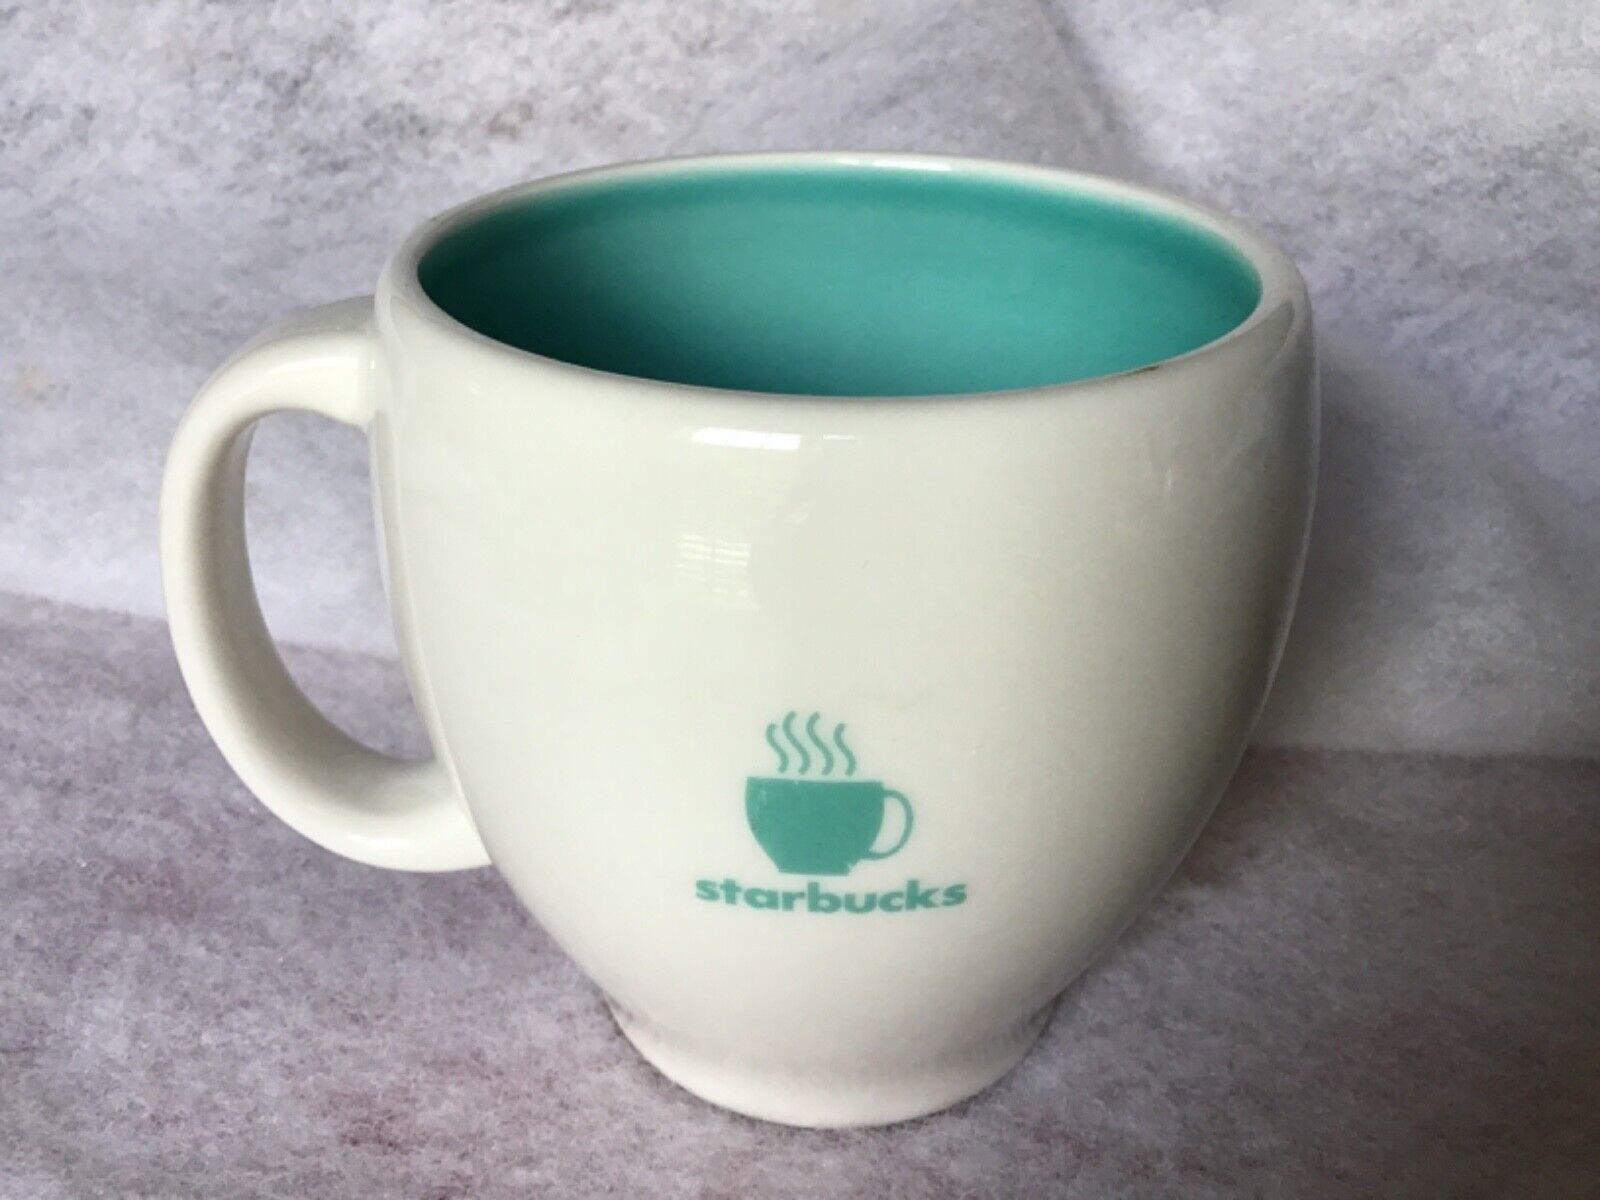 starbucks Barista coffee mug 2003 white turquoise inside